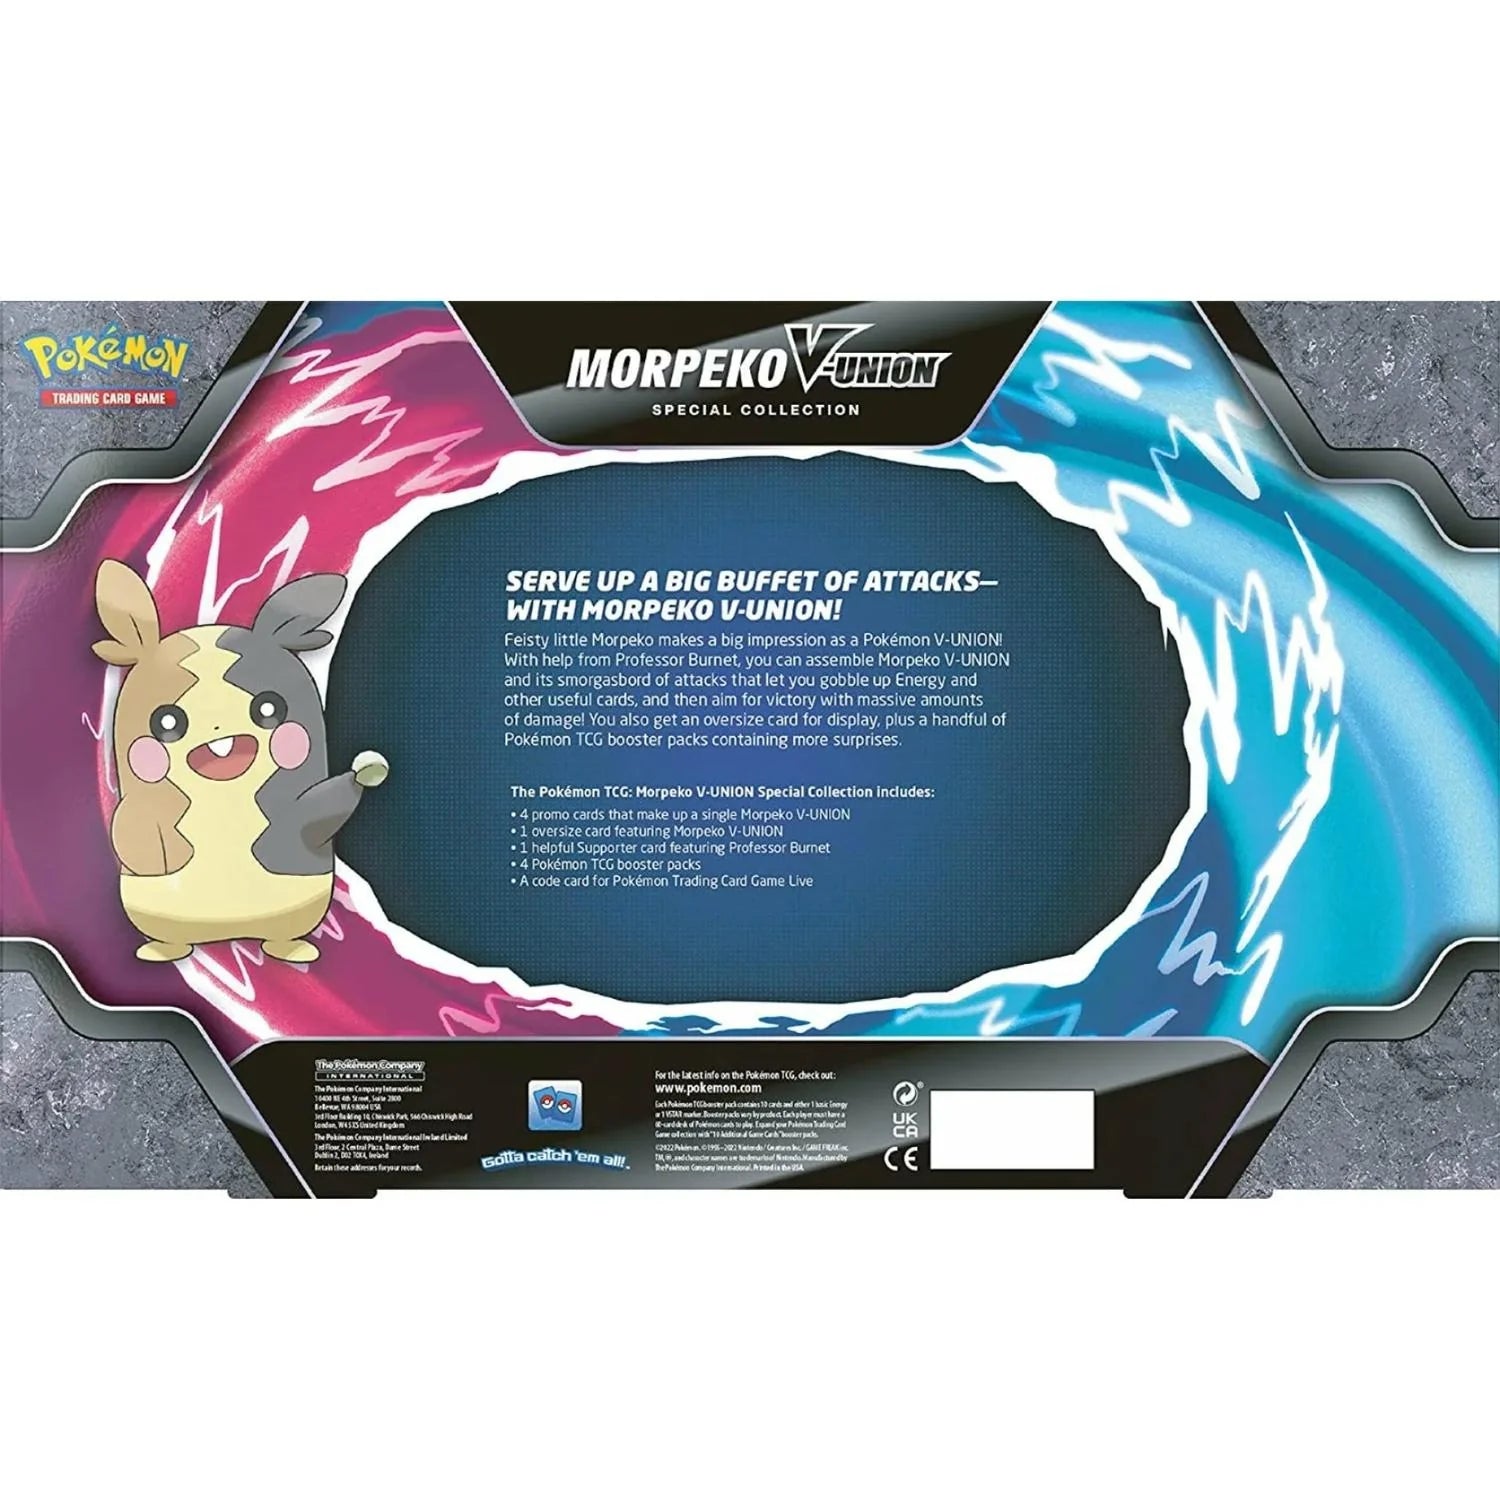 Pokemon TCG Morpeko V Union Special Collection Box